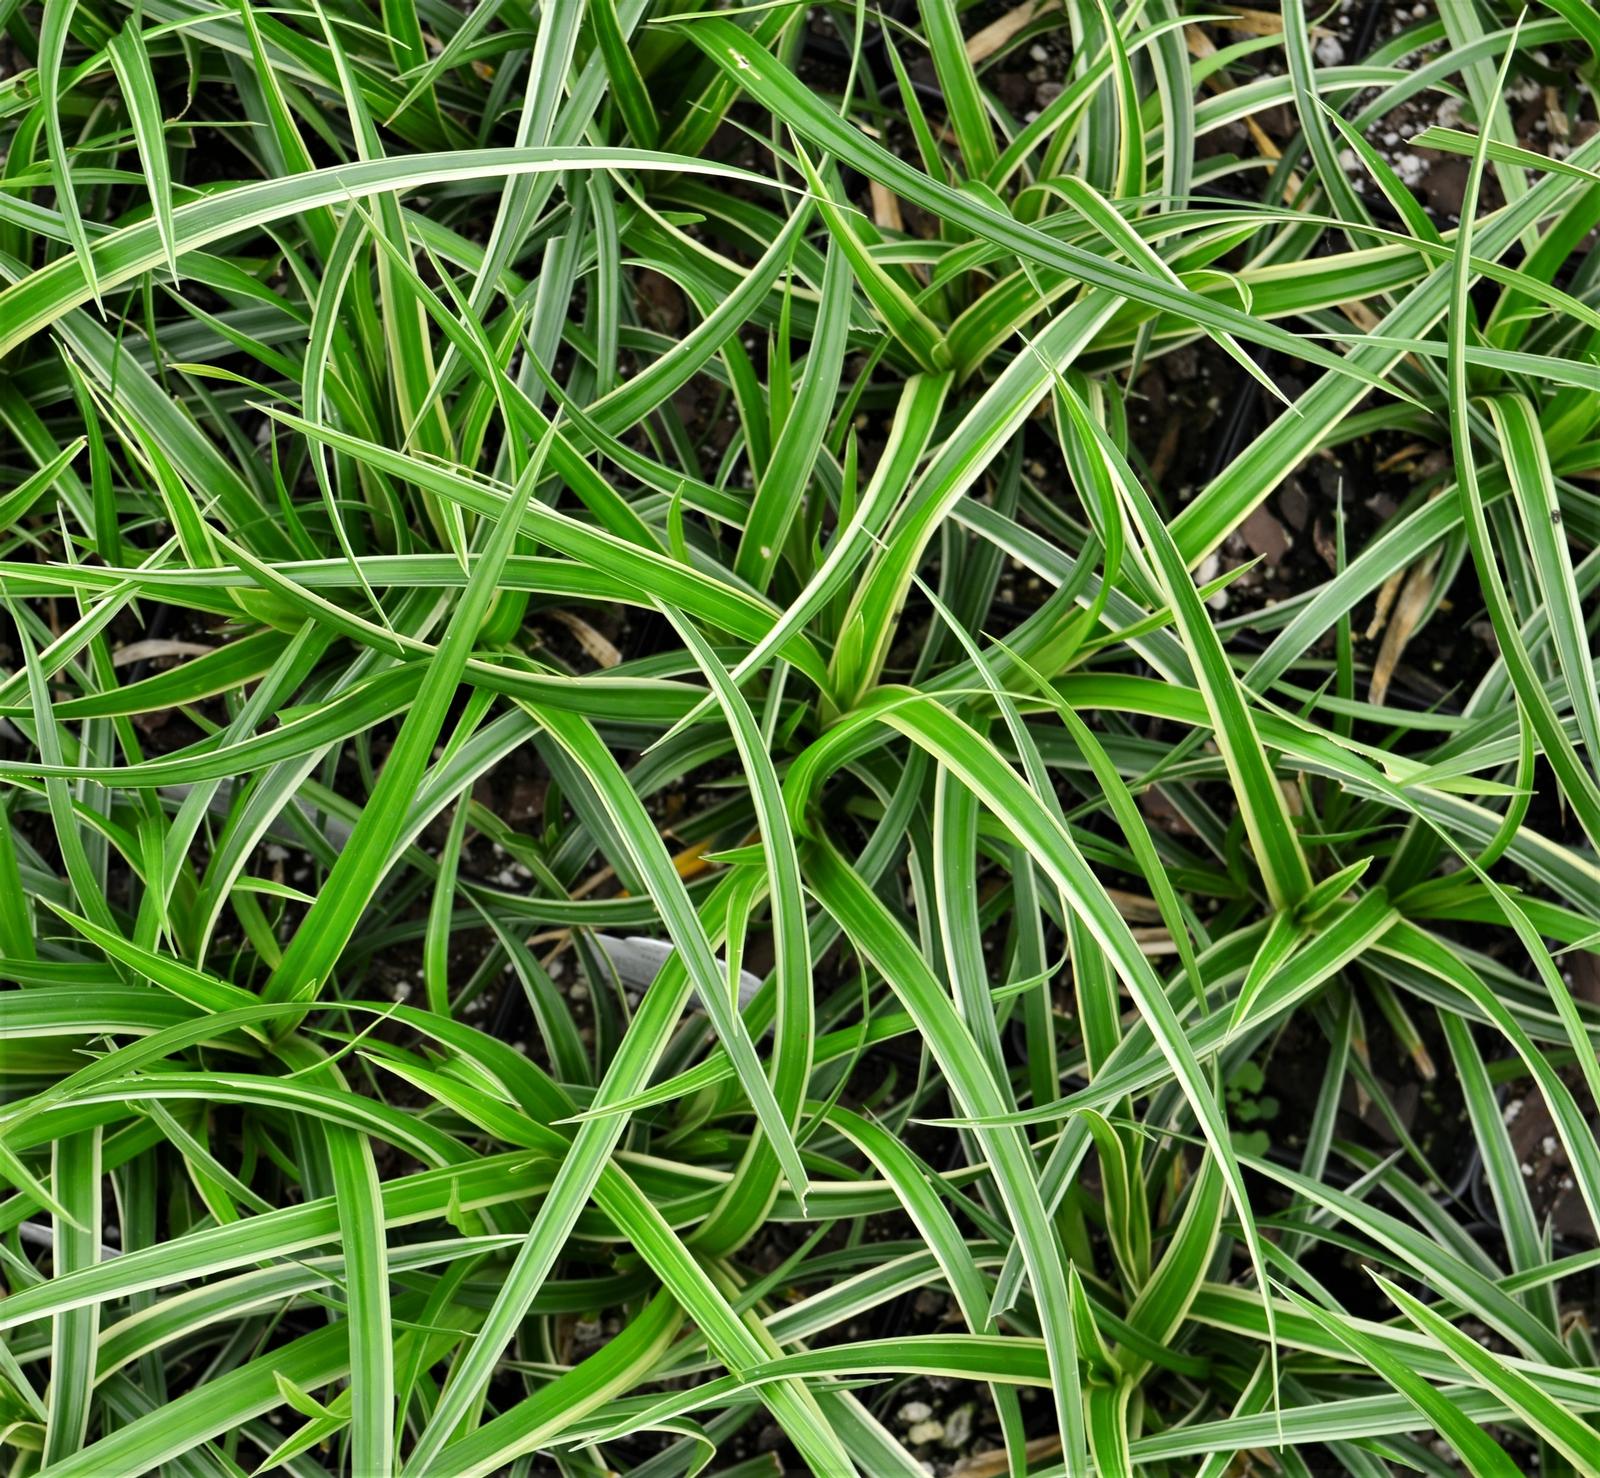 Grass: Carex morrowii 'Ice Dance' - Sedge from Hillcrest Nursery